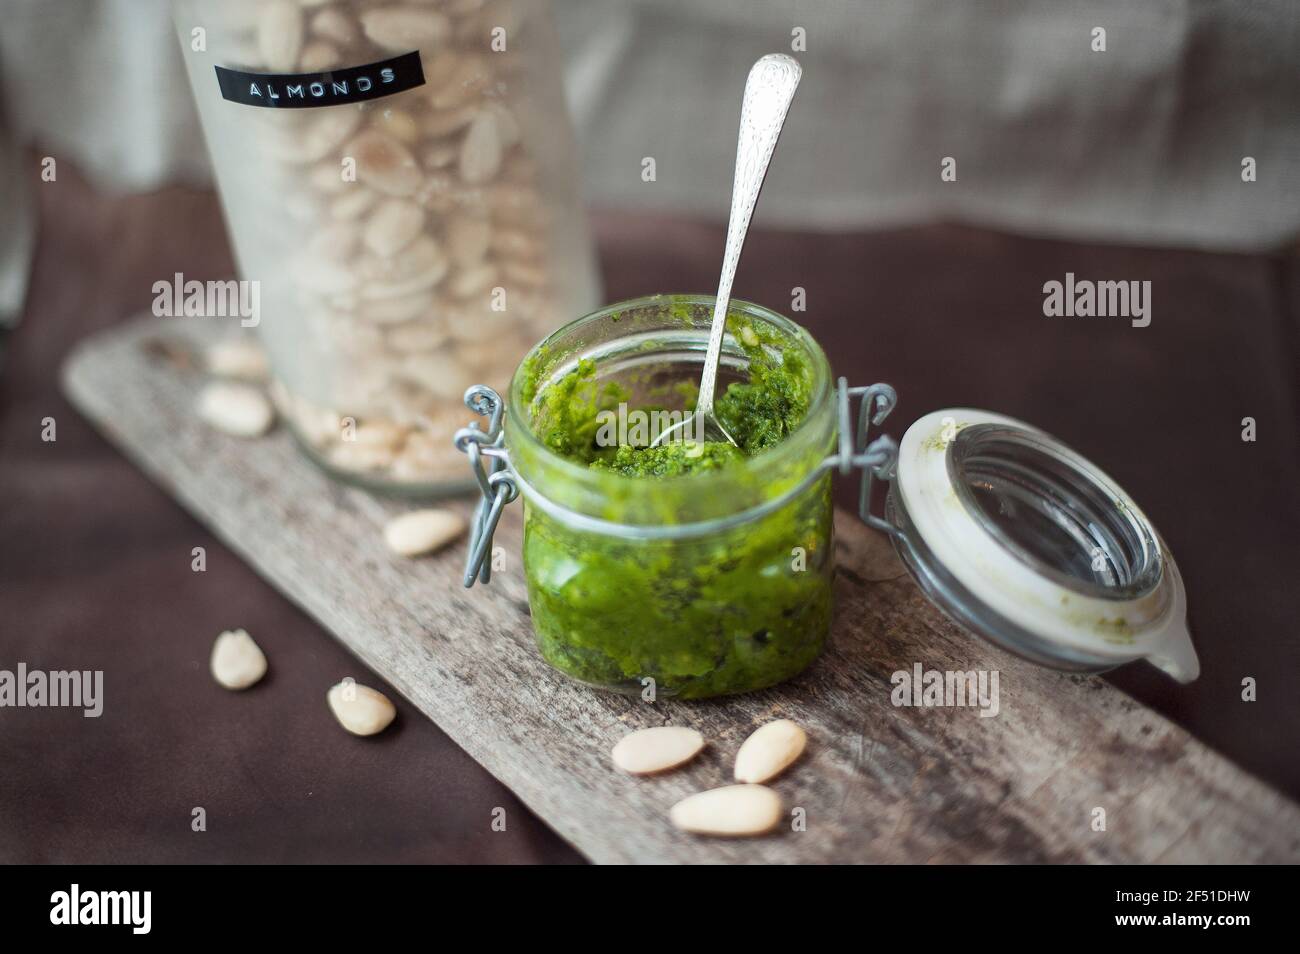 Close-up of homemade, vegan and gluten-free pesto sauce in glass jar. Stock Photo